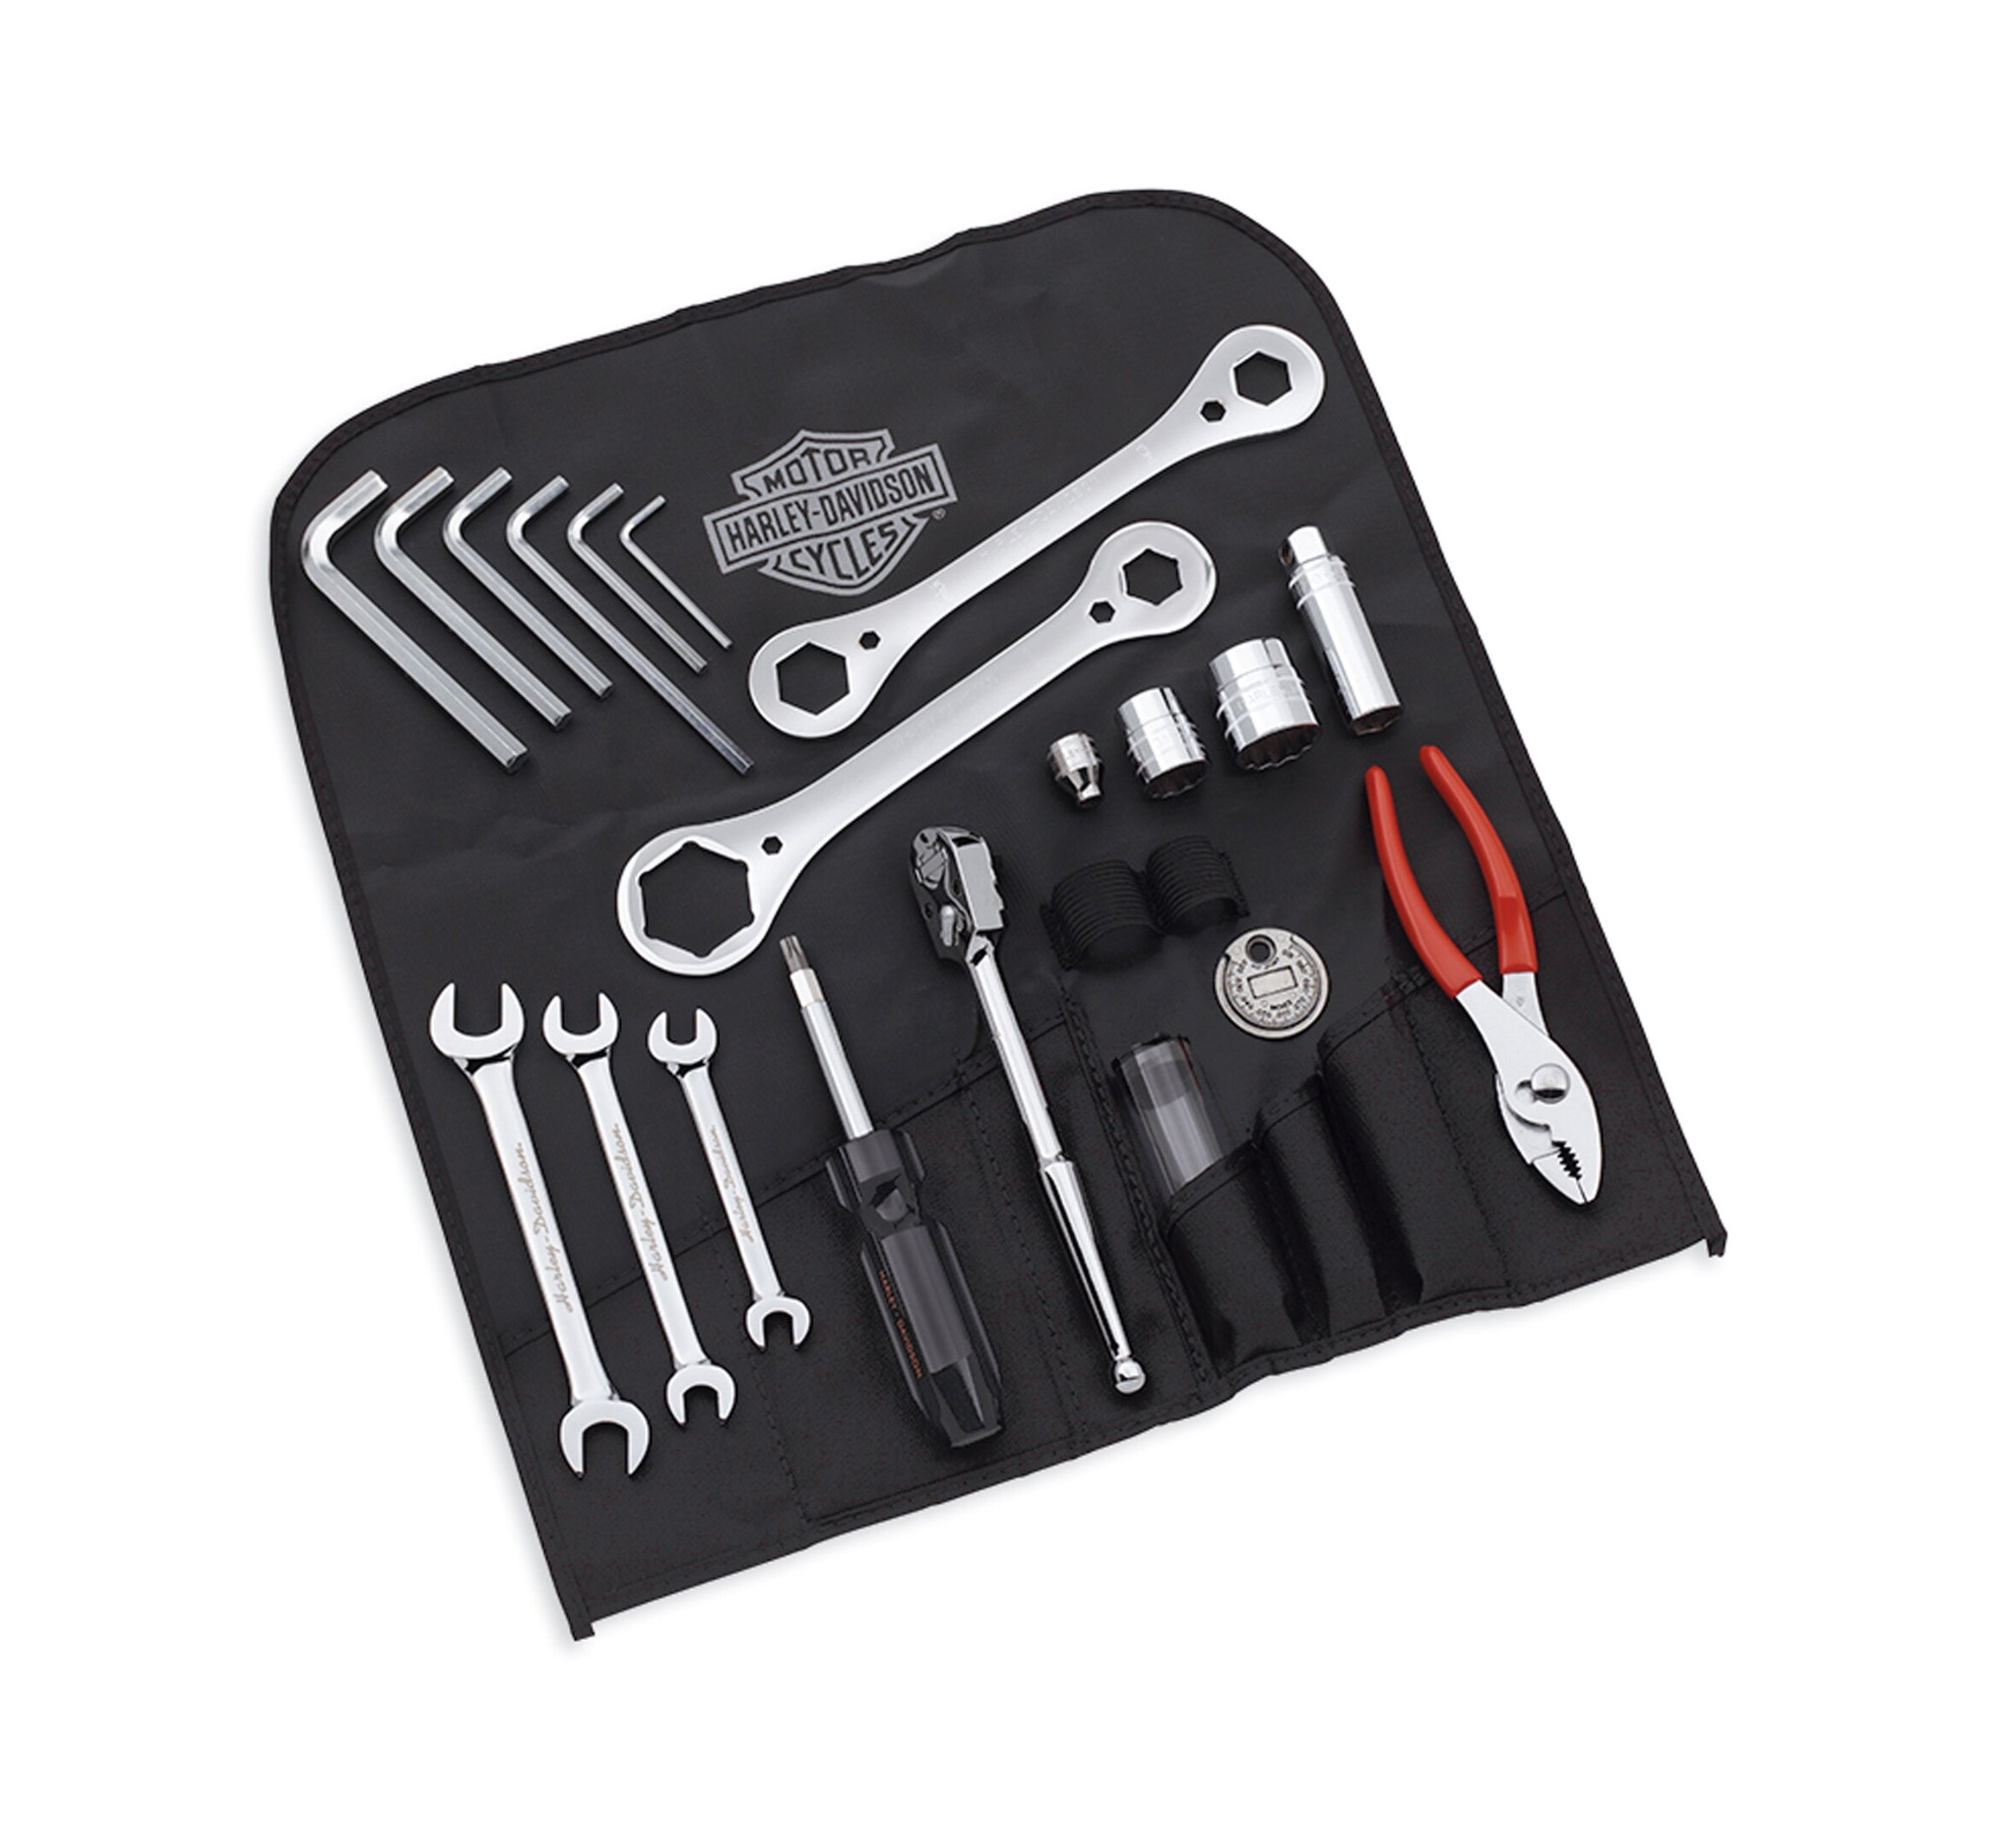 key ring screwdriver emergency toolkit ideal gift idea UK seller 